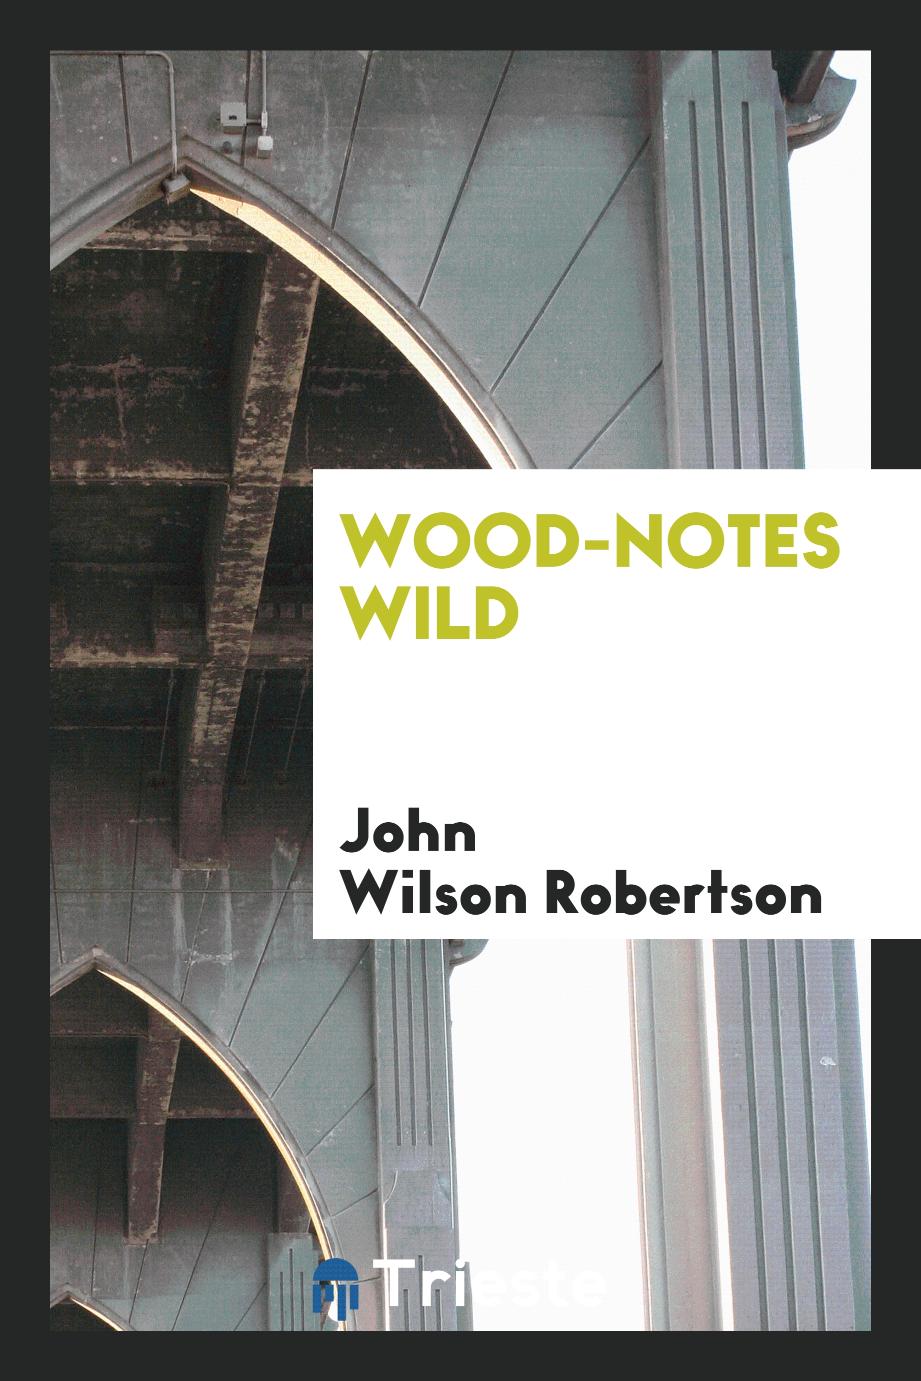 Wood-notes wild